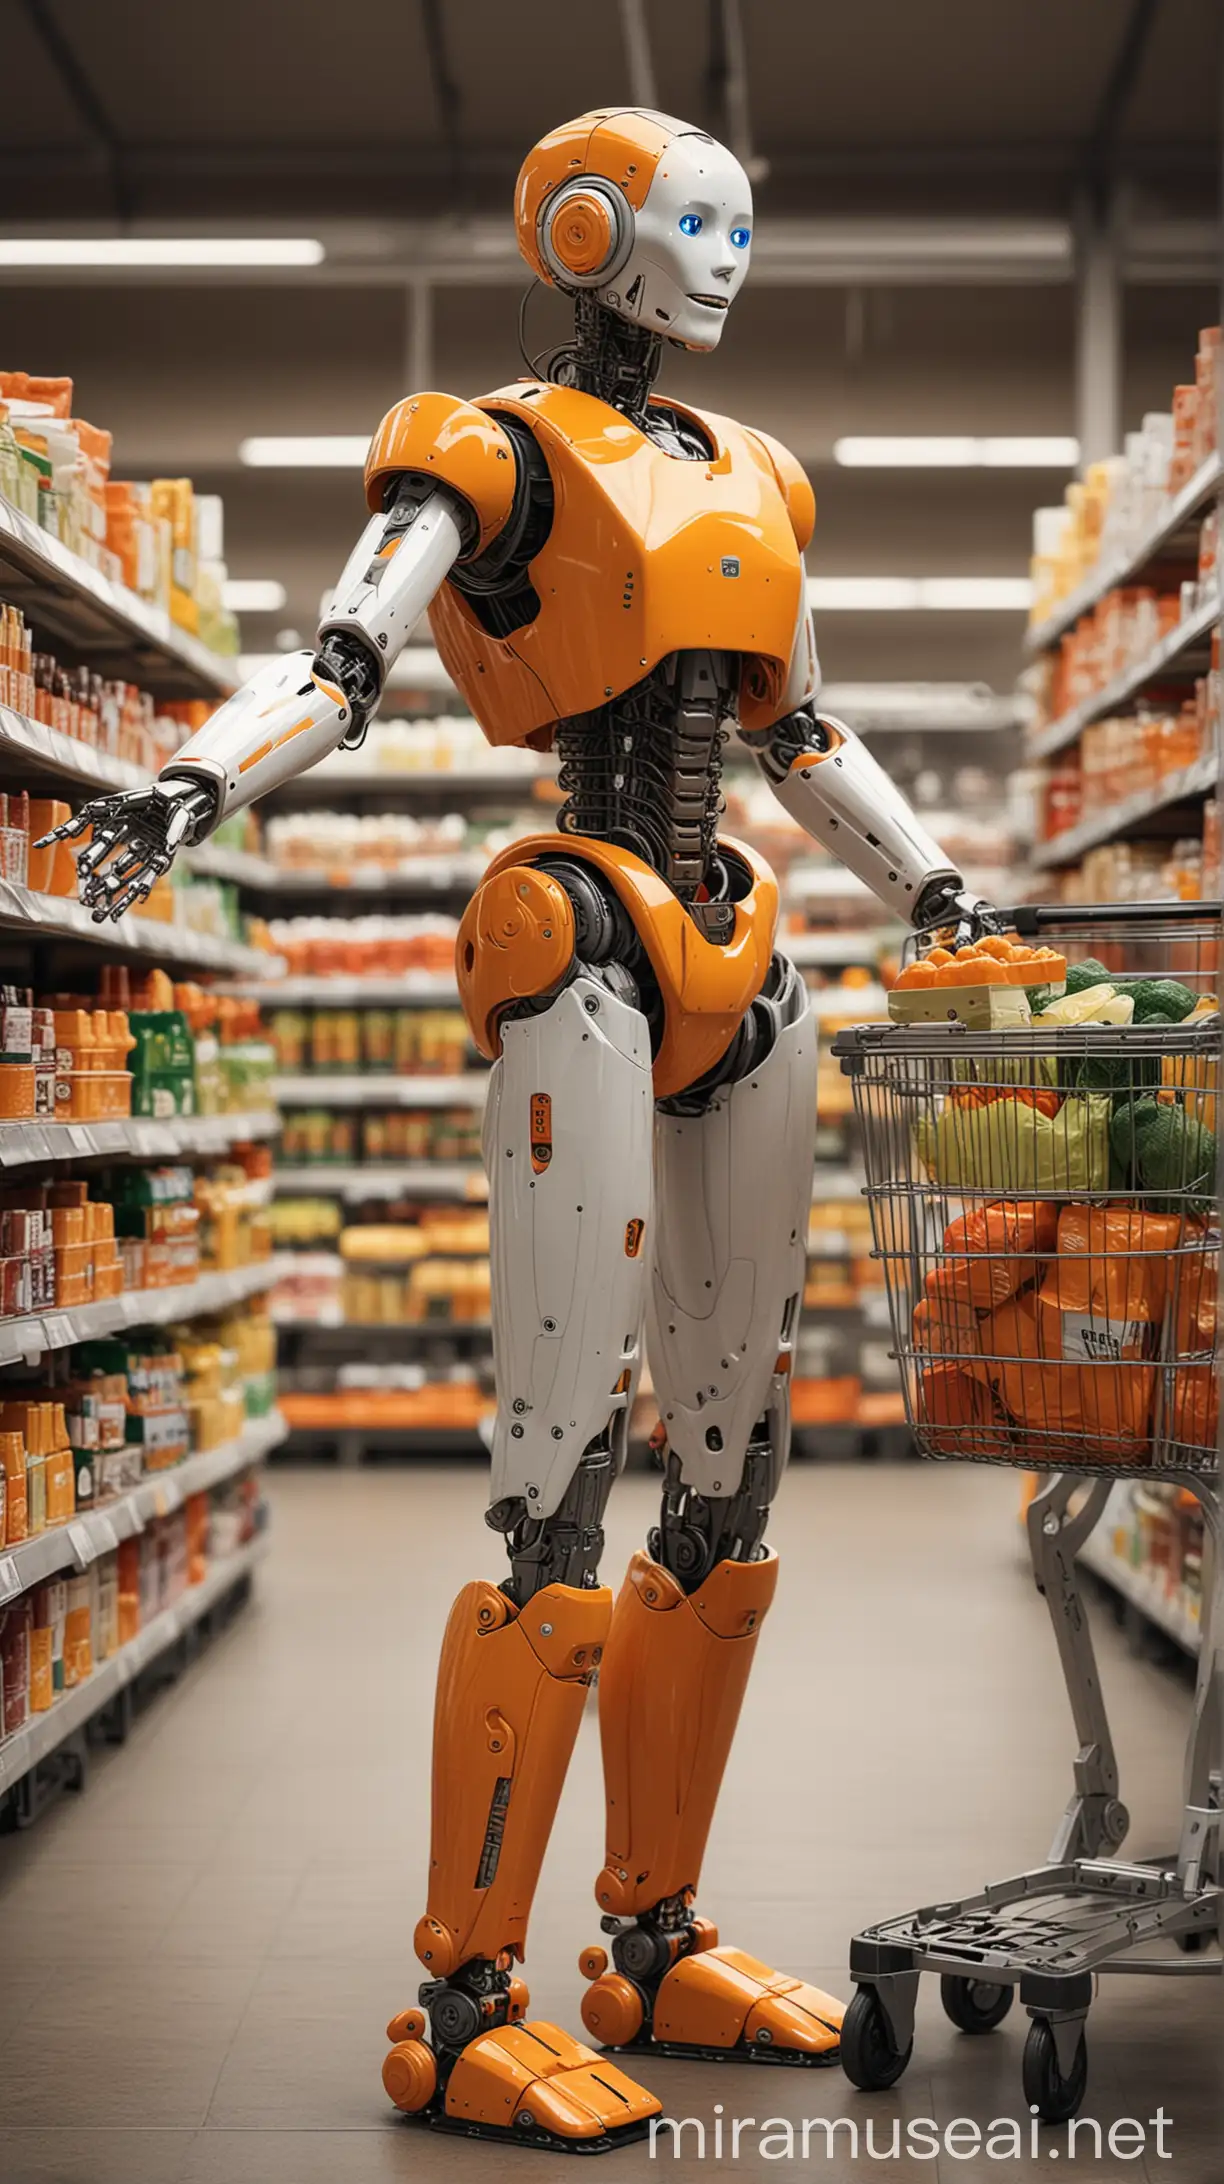 robot doing grocery shopping, use orange color mostly, robot should doing hi gesture too